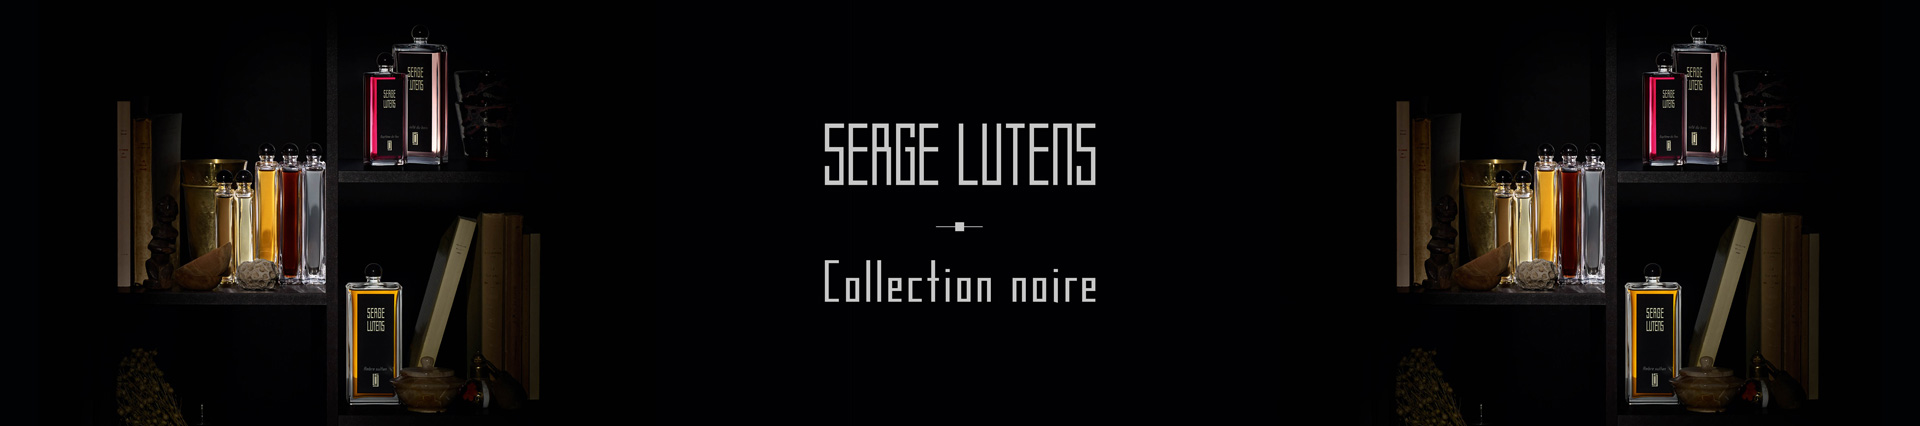 Parfums Serge Lutens